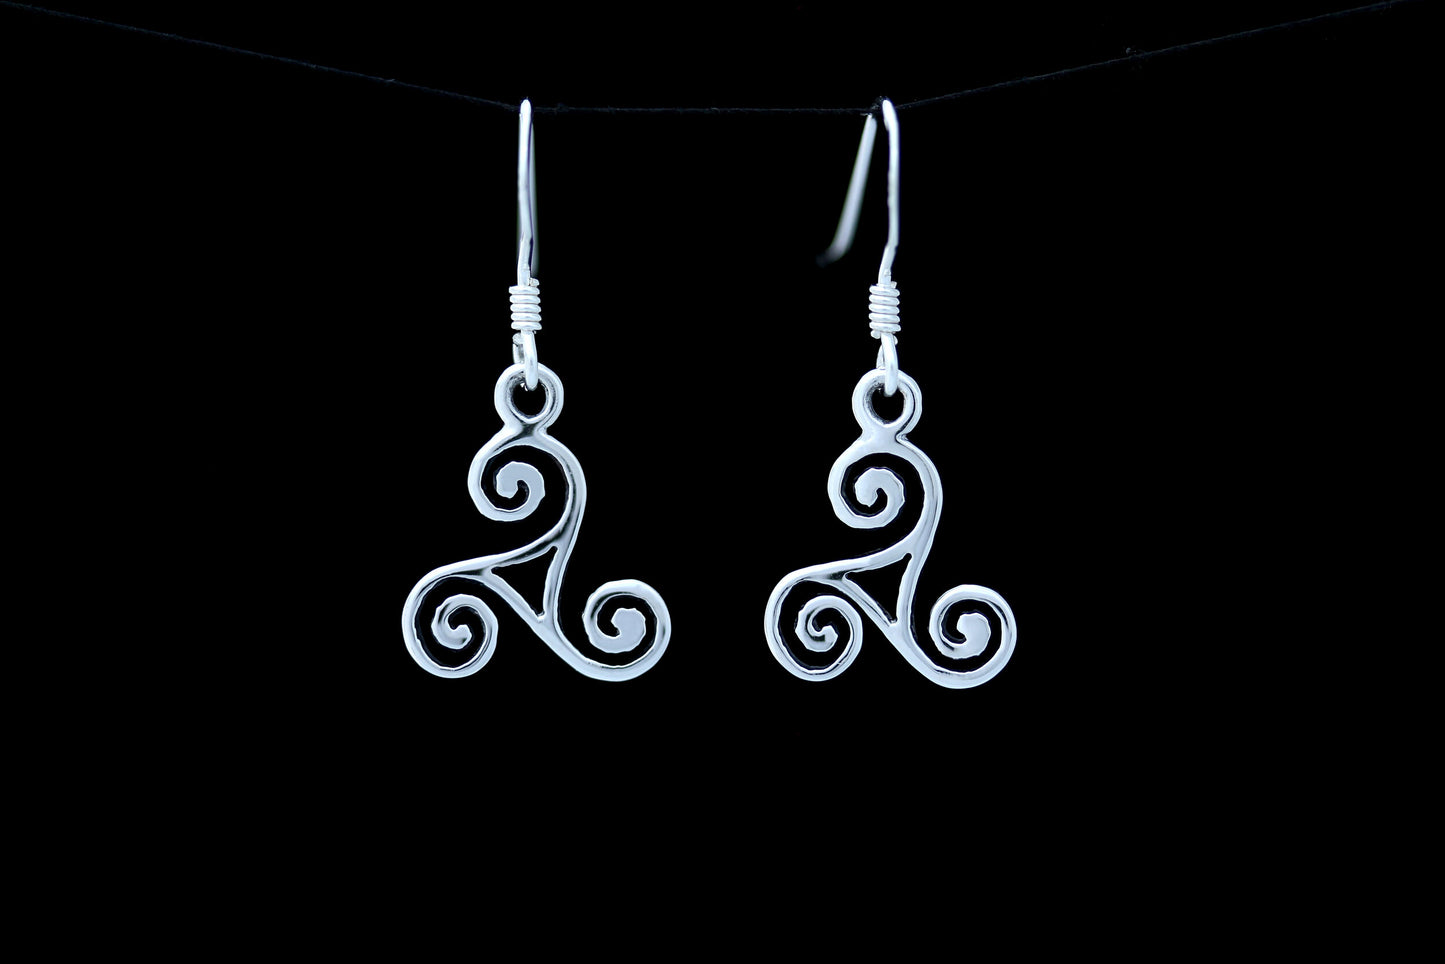 Triskele Earrings - Swirly Arms with Window (Medium)